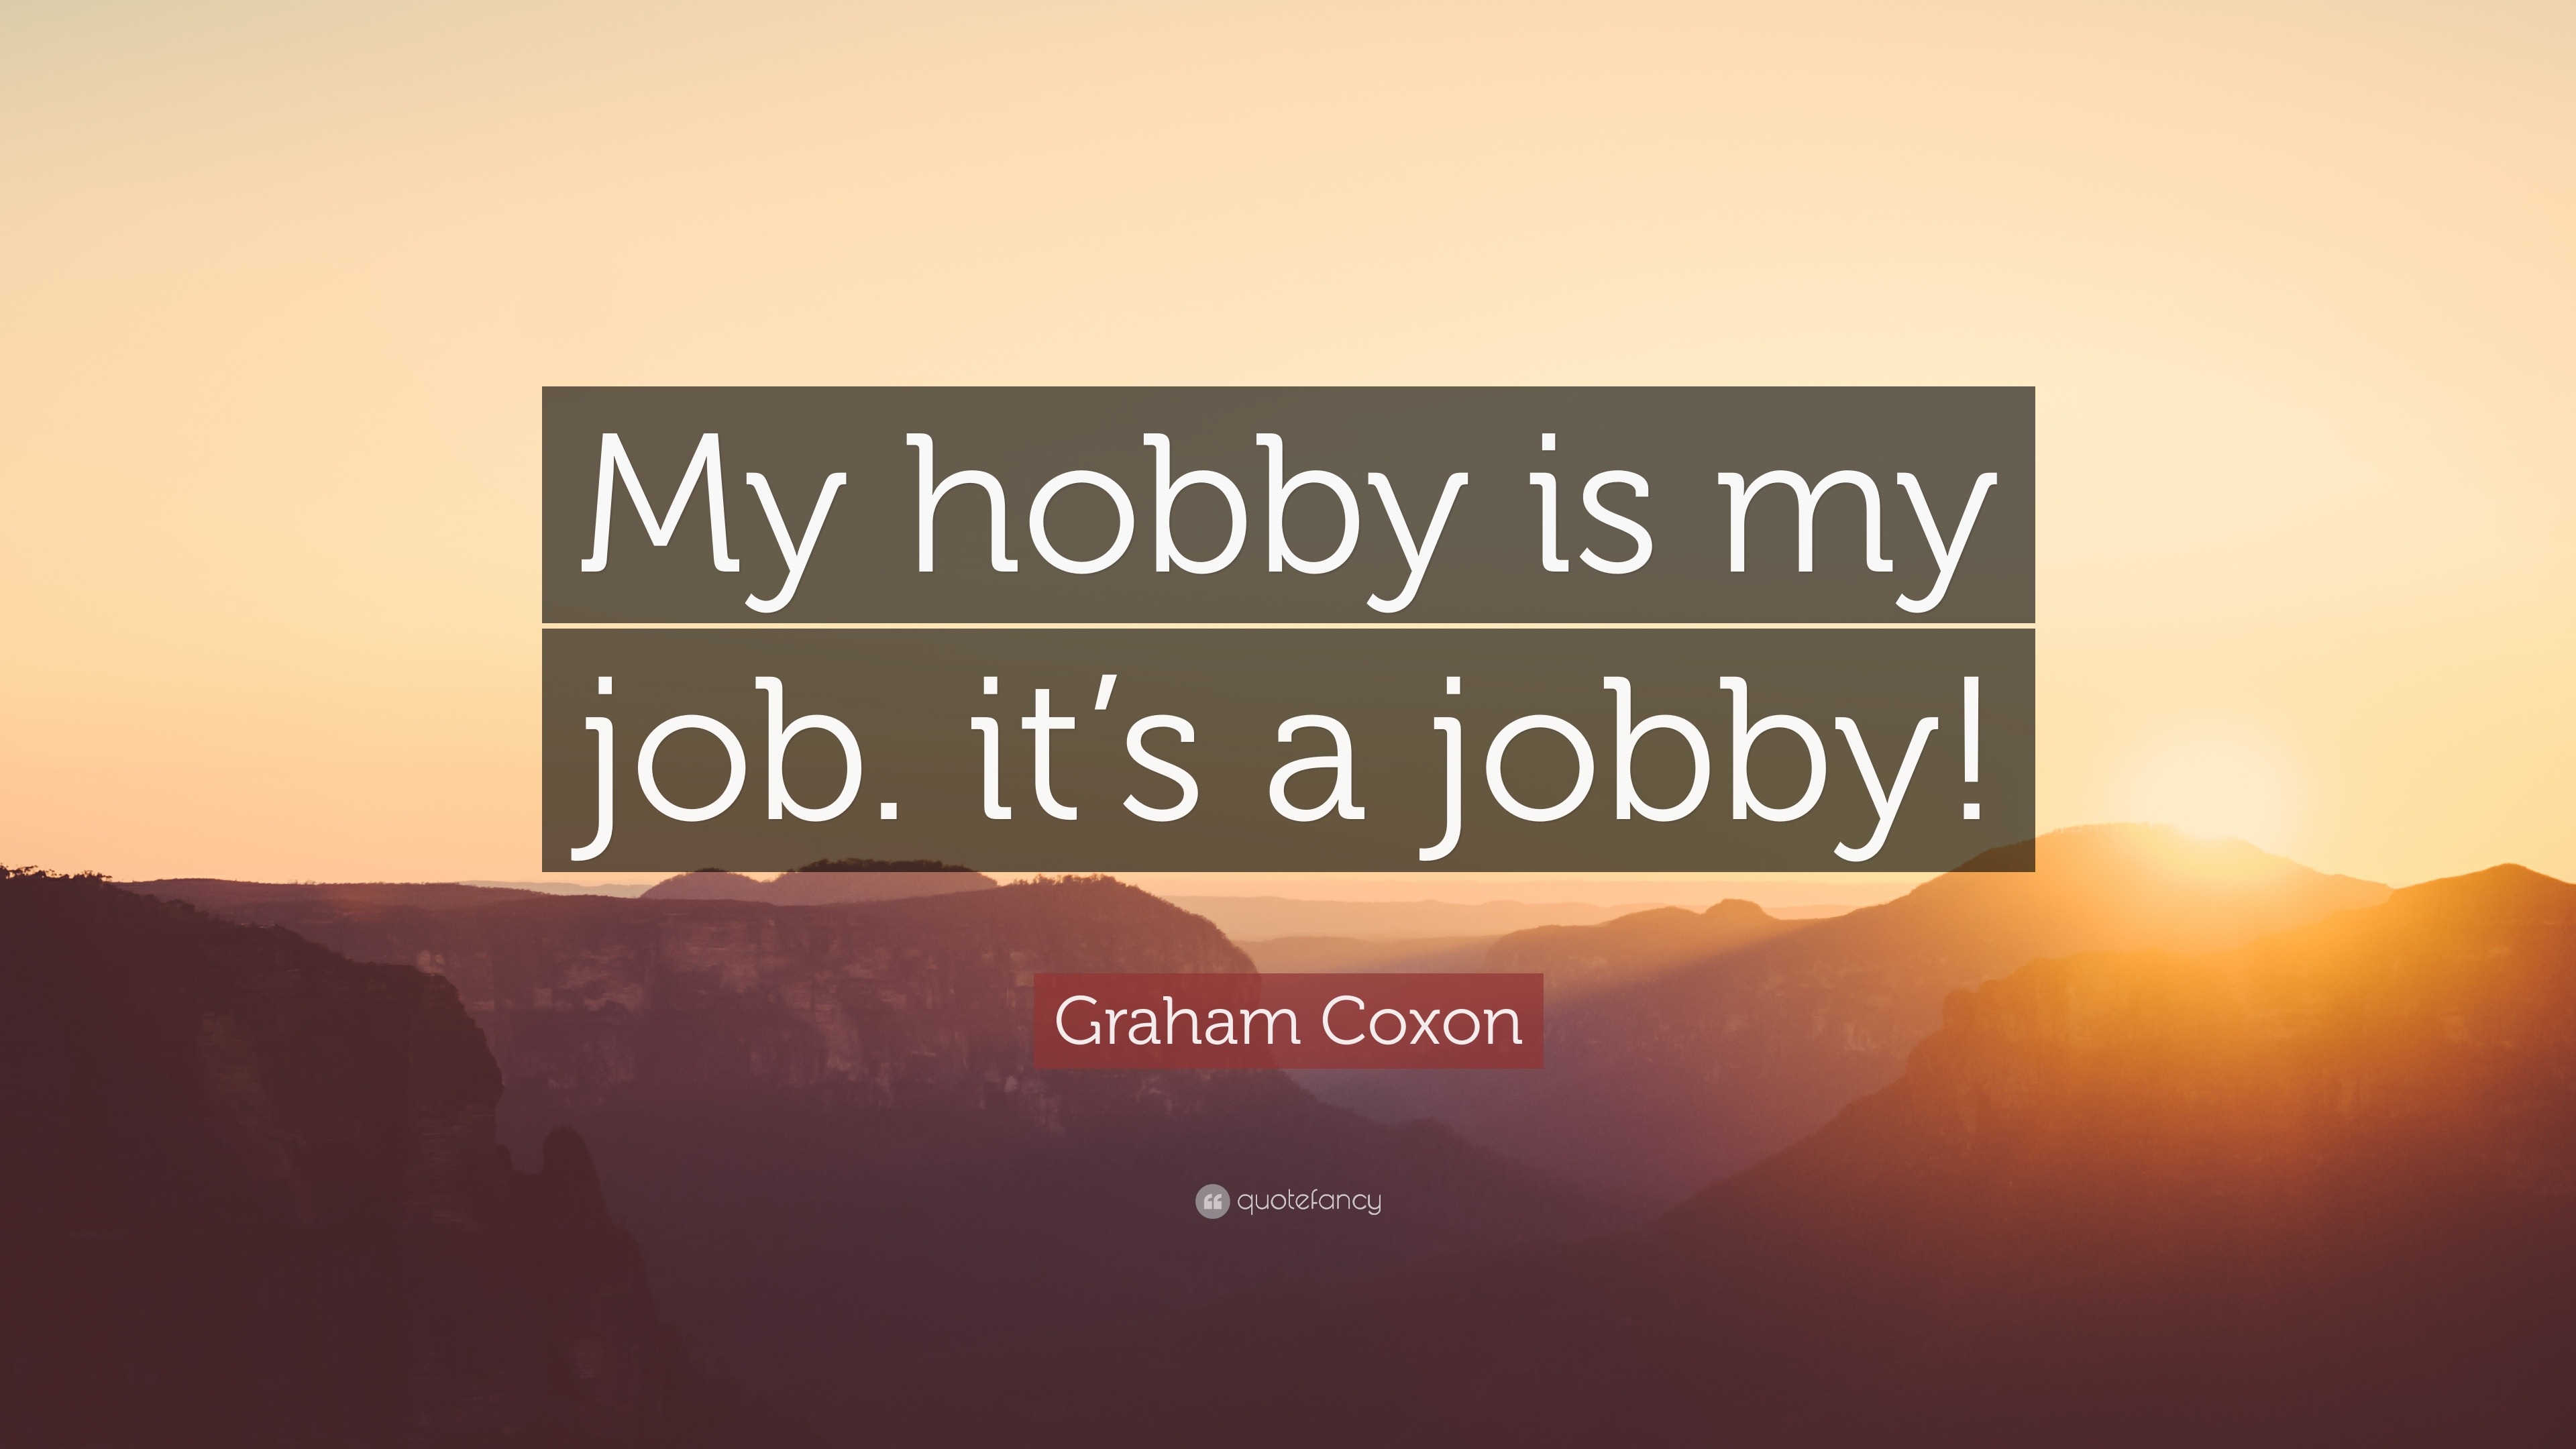 Graham Coxon Quote: “My hobby is my job. it's a jobby!”